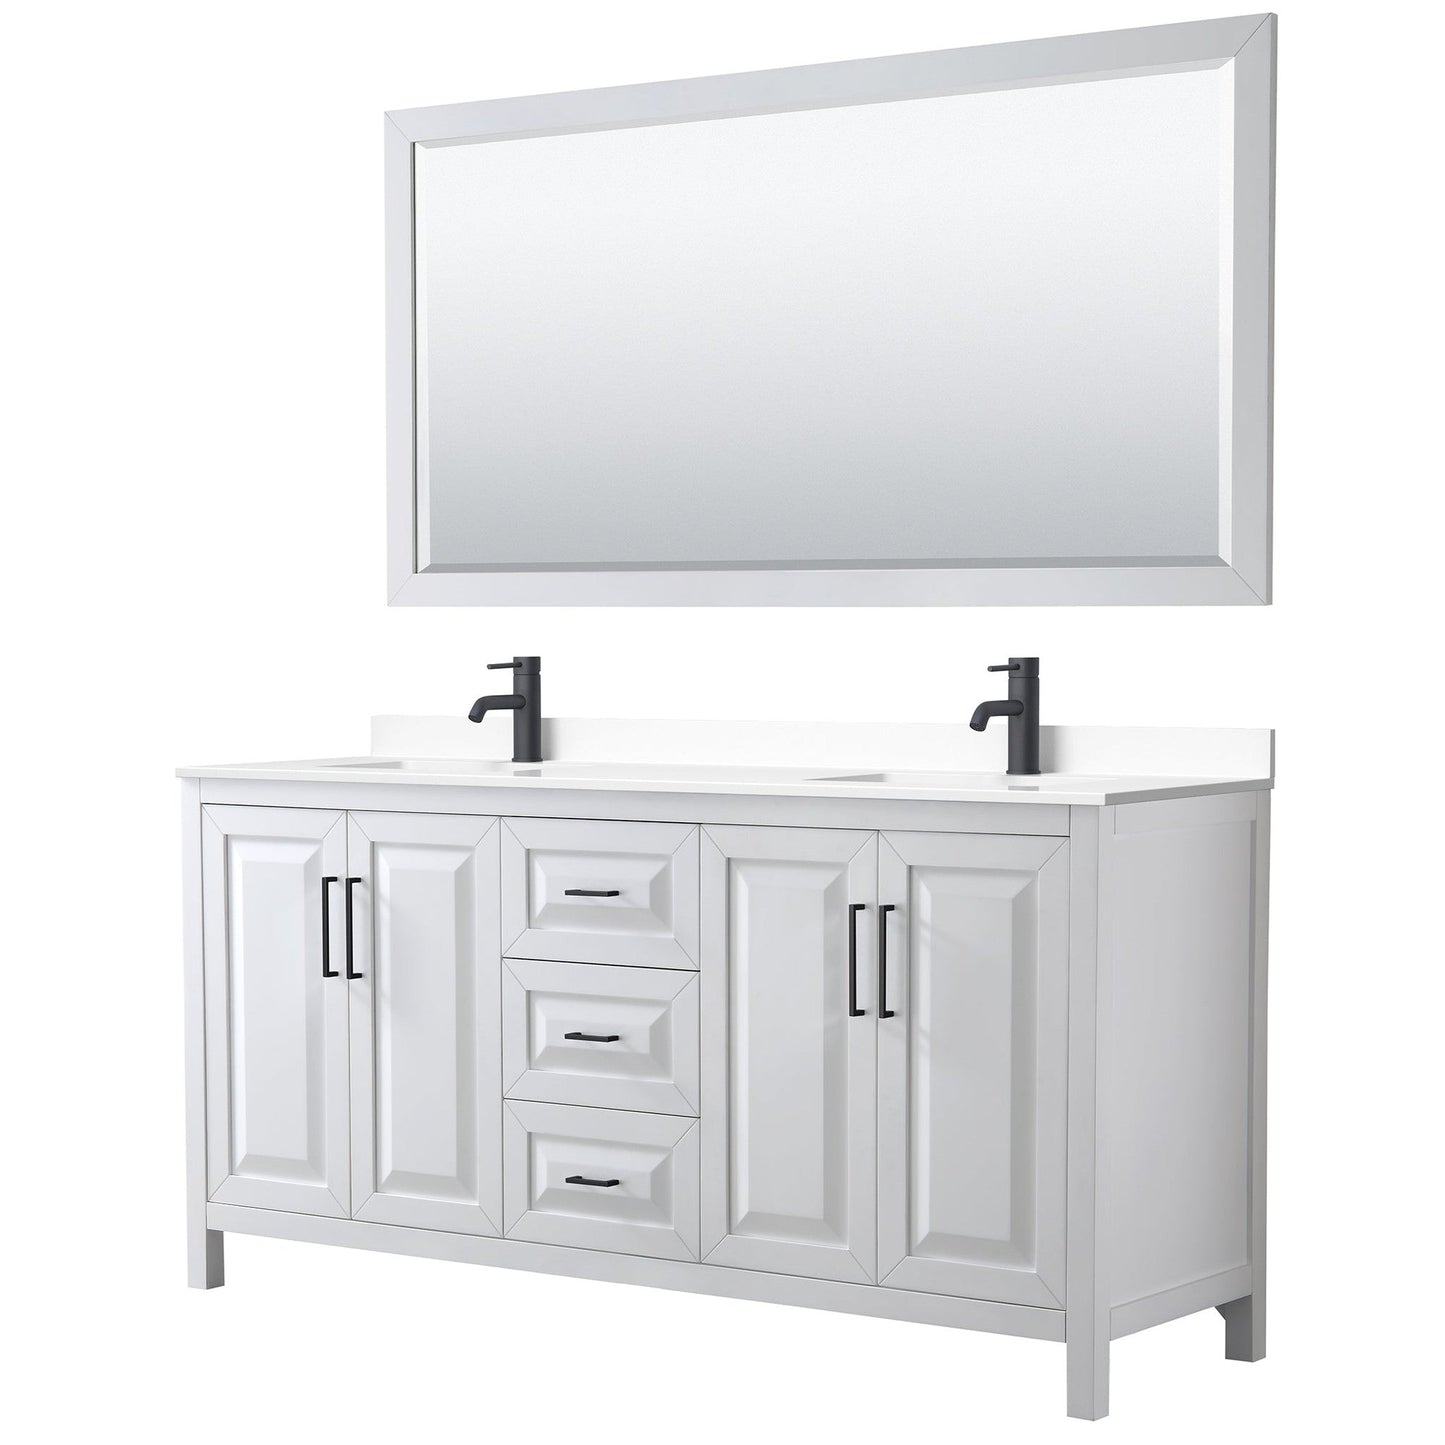 Daria 72" Double Bathroom Vanity in White, White Cultured Marble Countertop, Undermount Square Sinks, Matte Black Trim, 70" Mirror